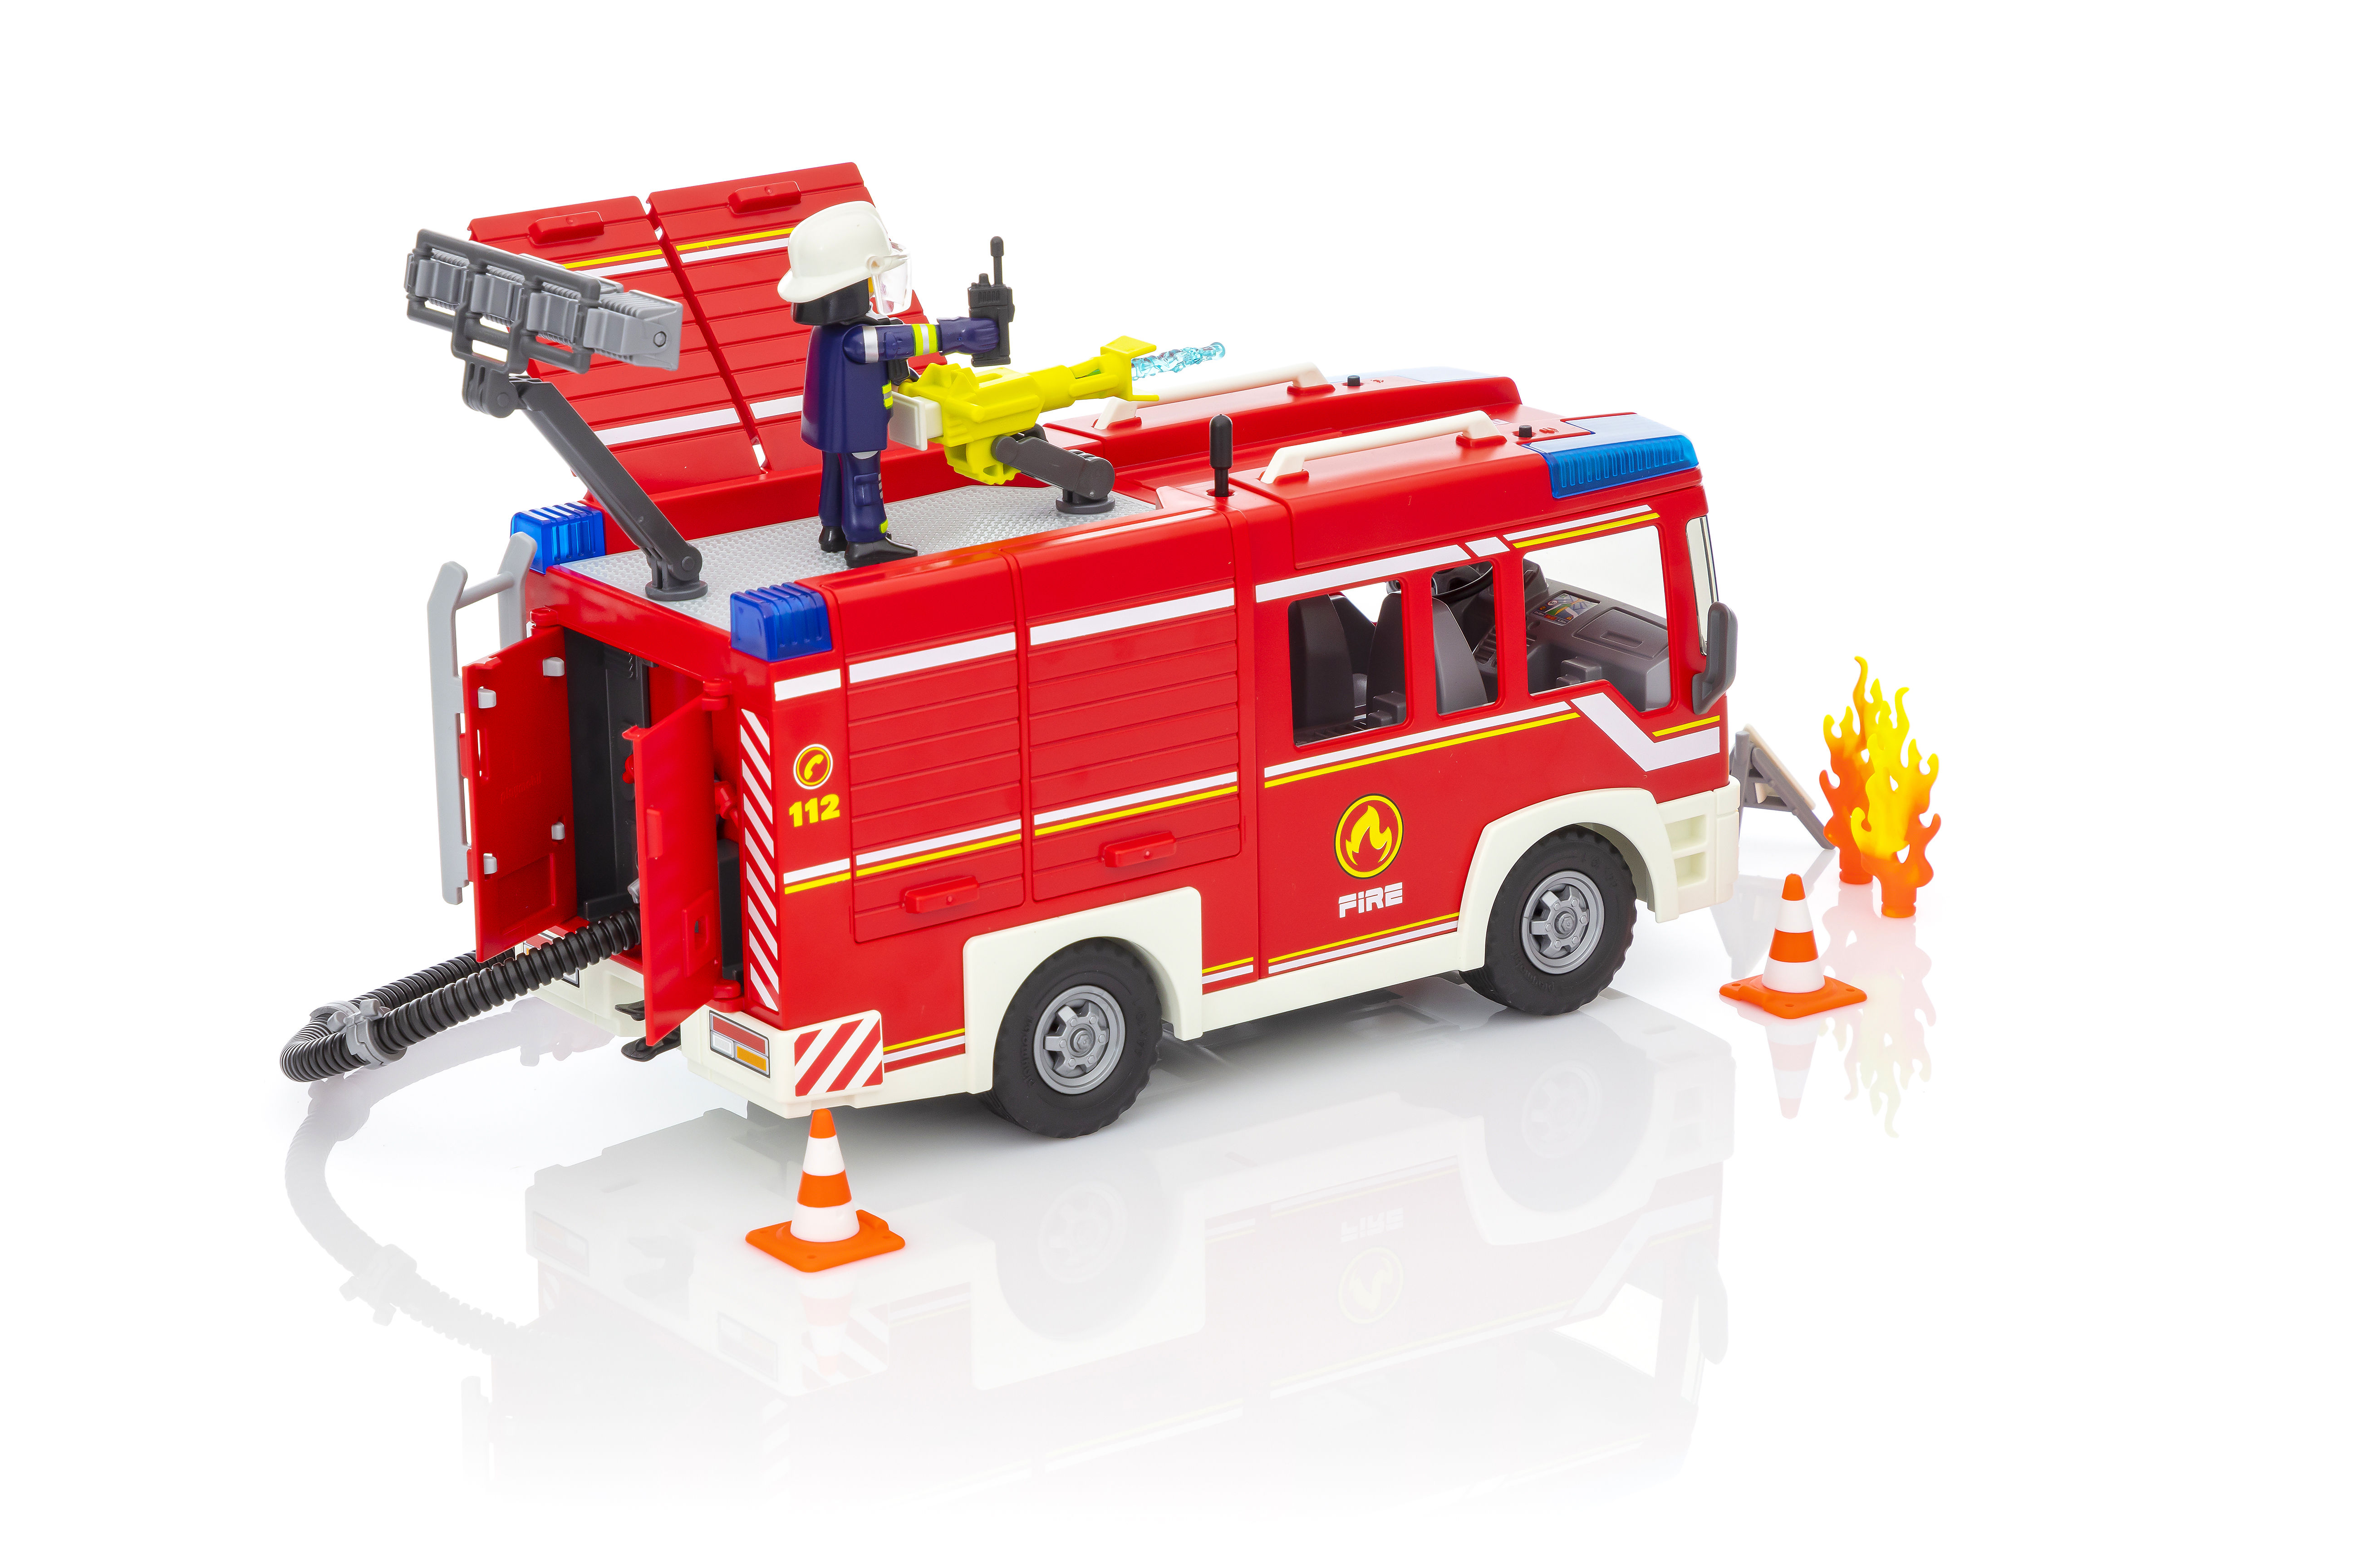 Playmobil 9464 - city action - fourgon d'intervention des pompiers